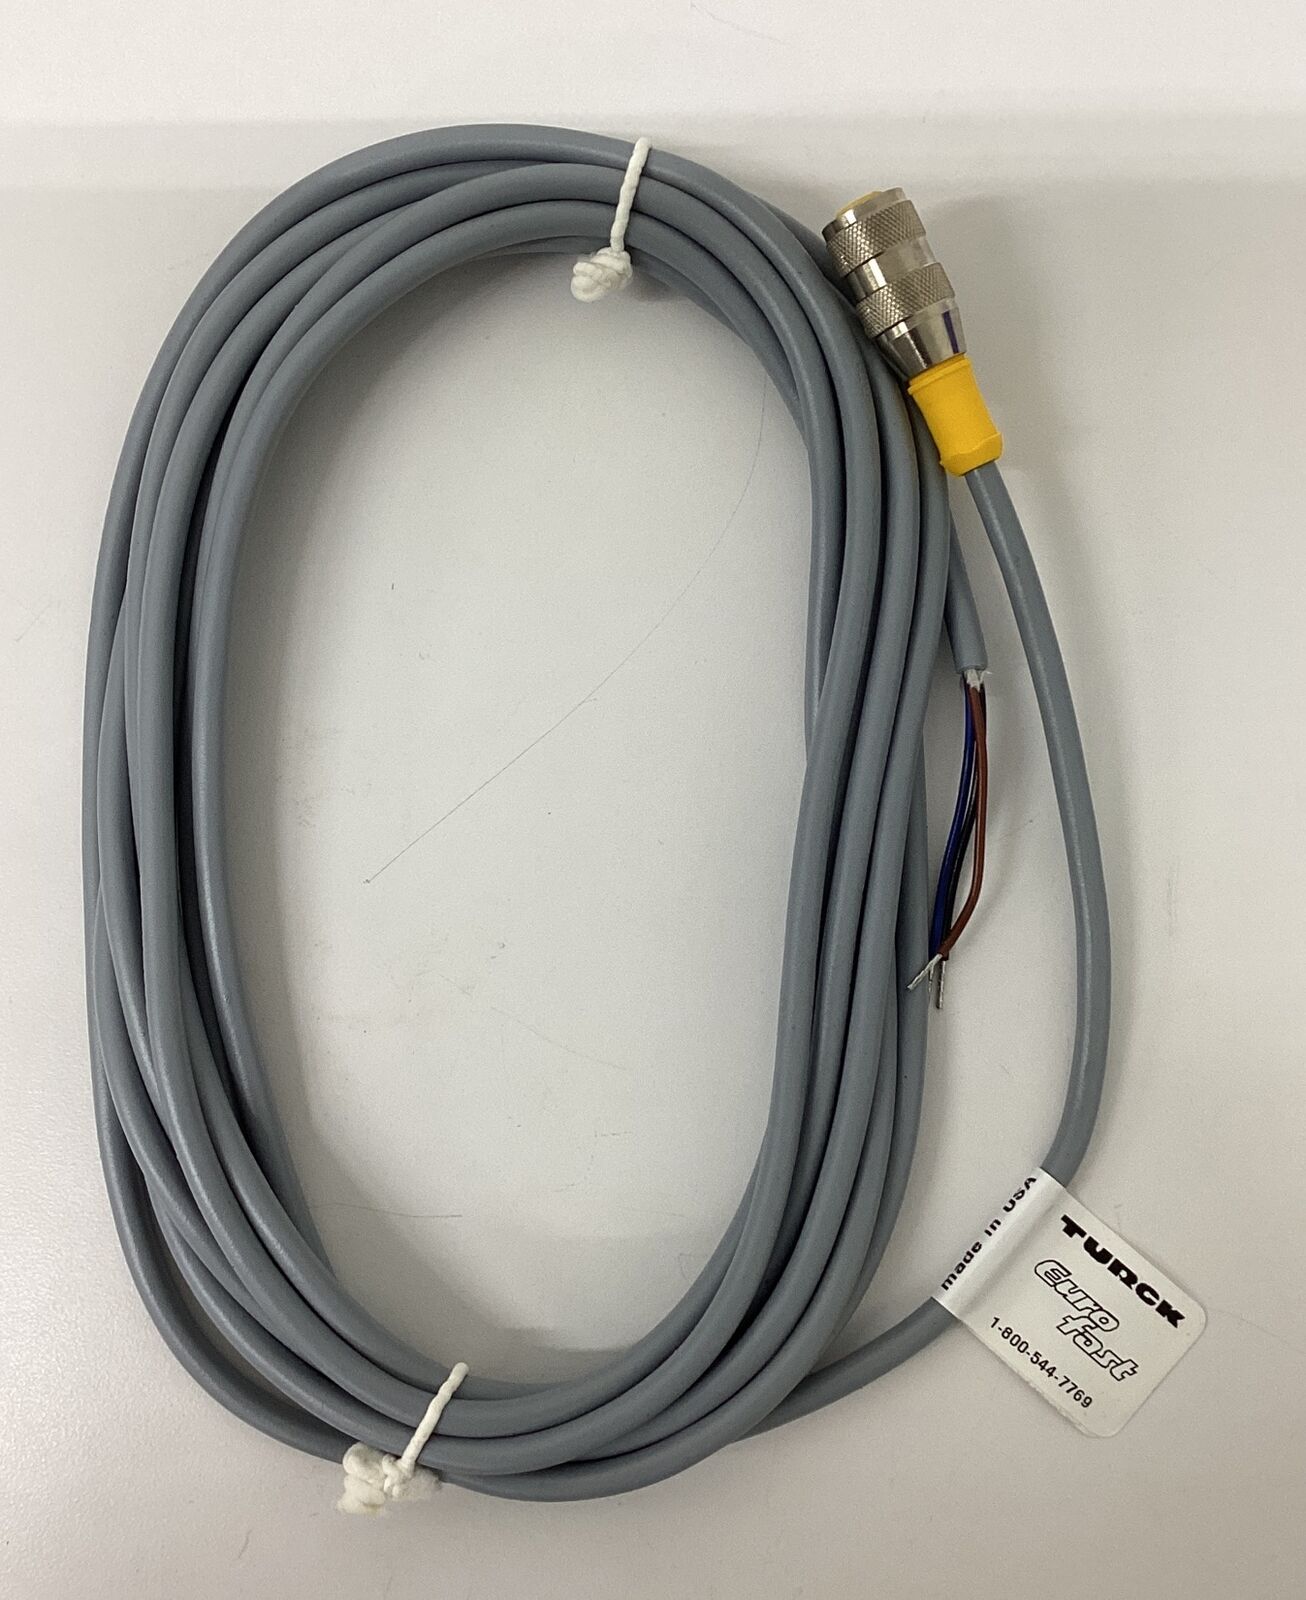 Turck RK-4T-4 / U2157 M12 Female Single End Cable 4-Meters (CBL152)